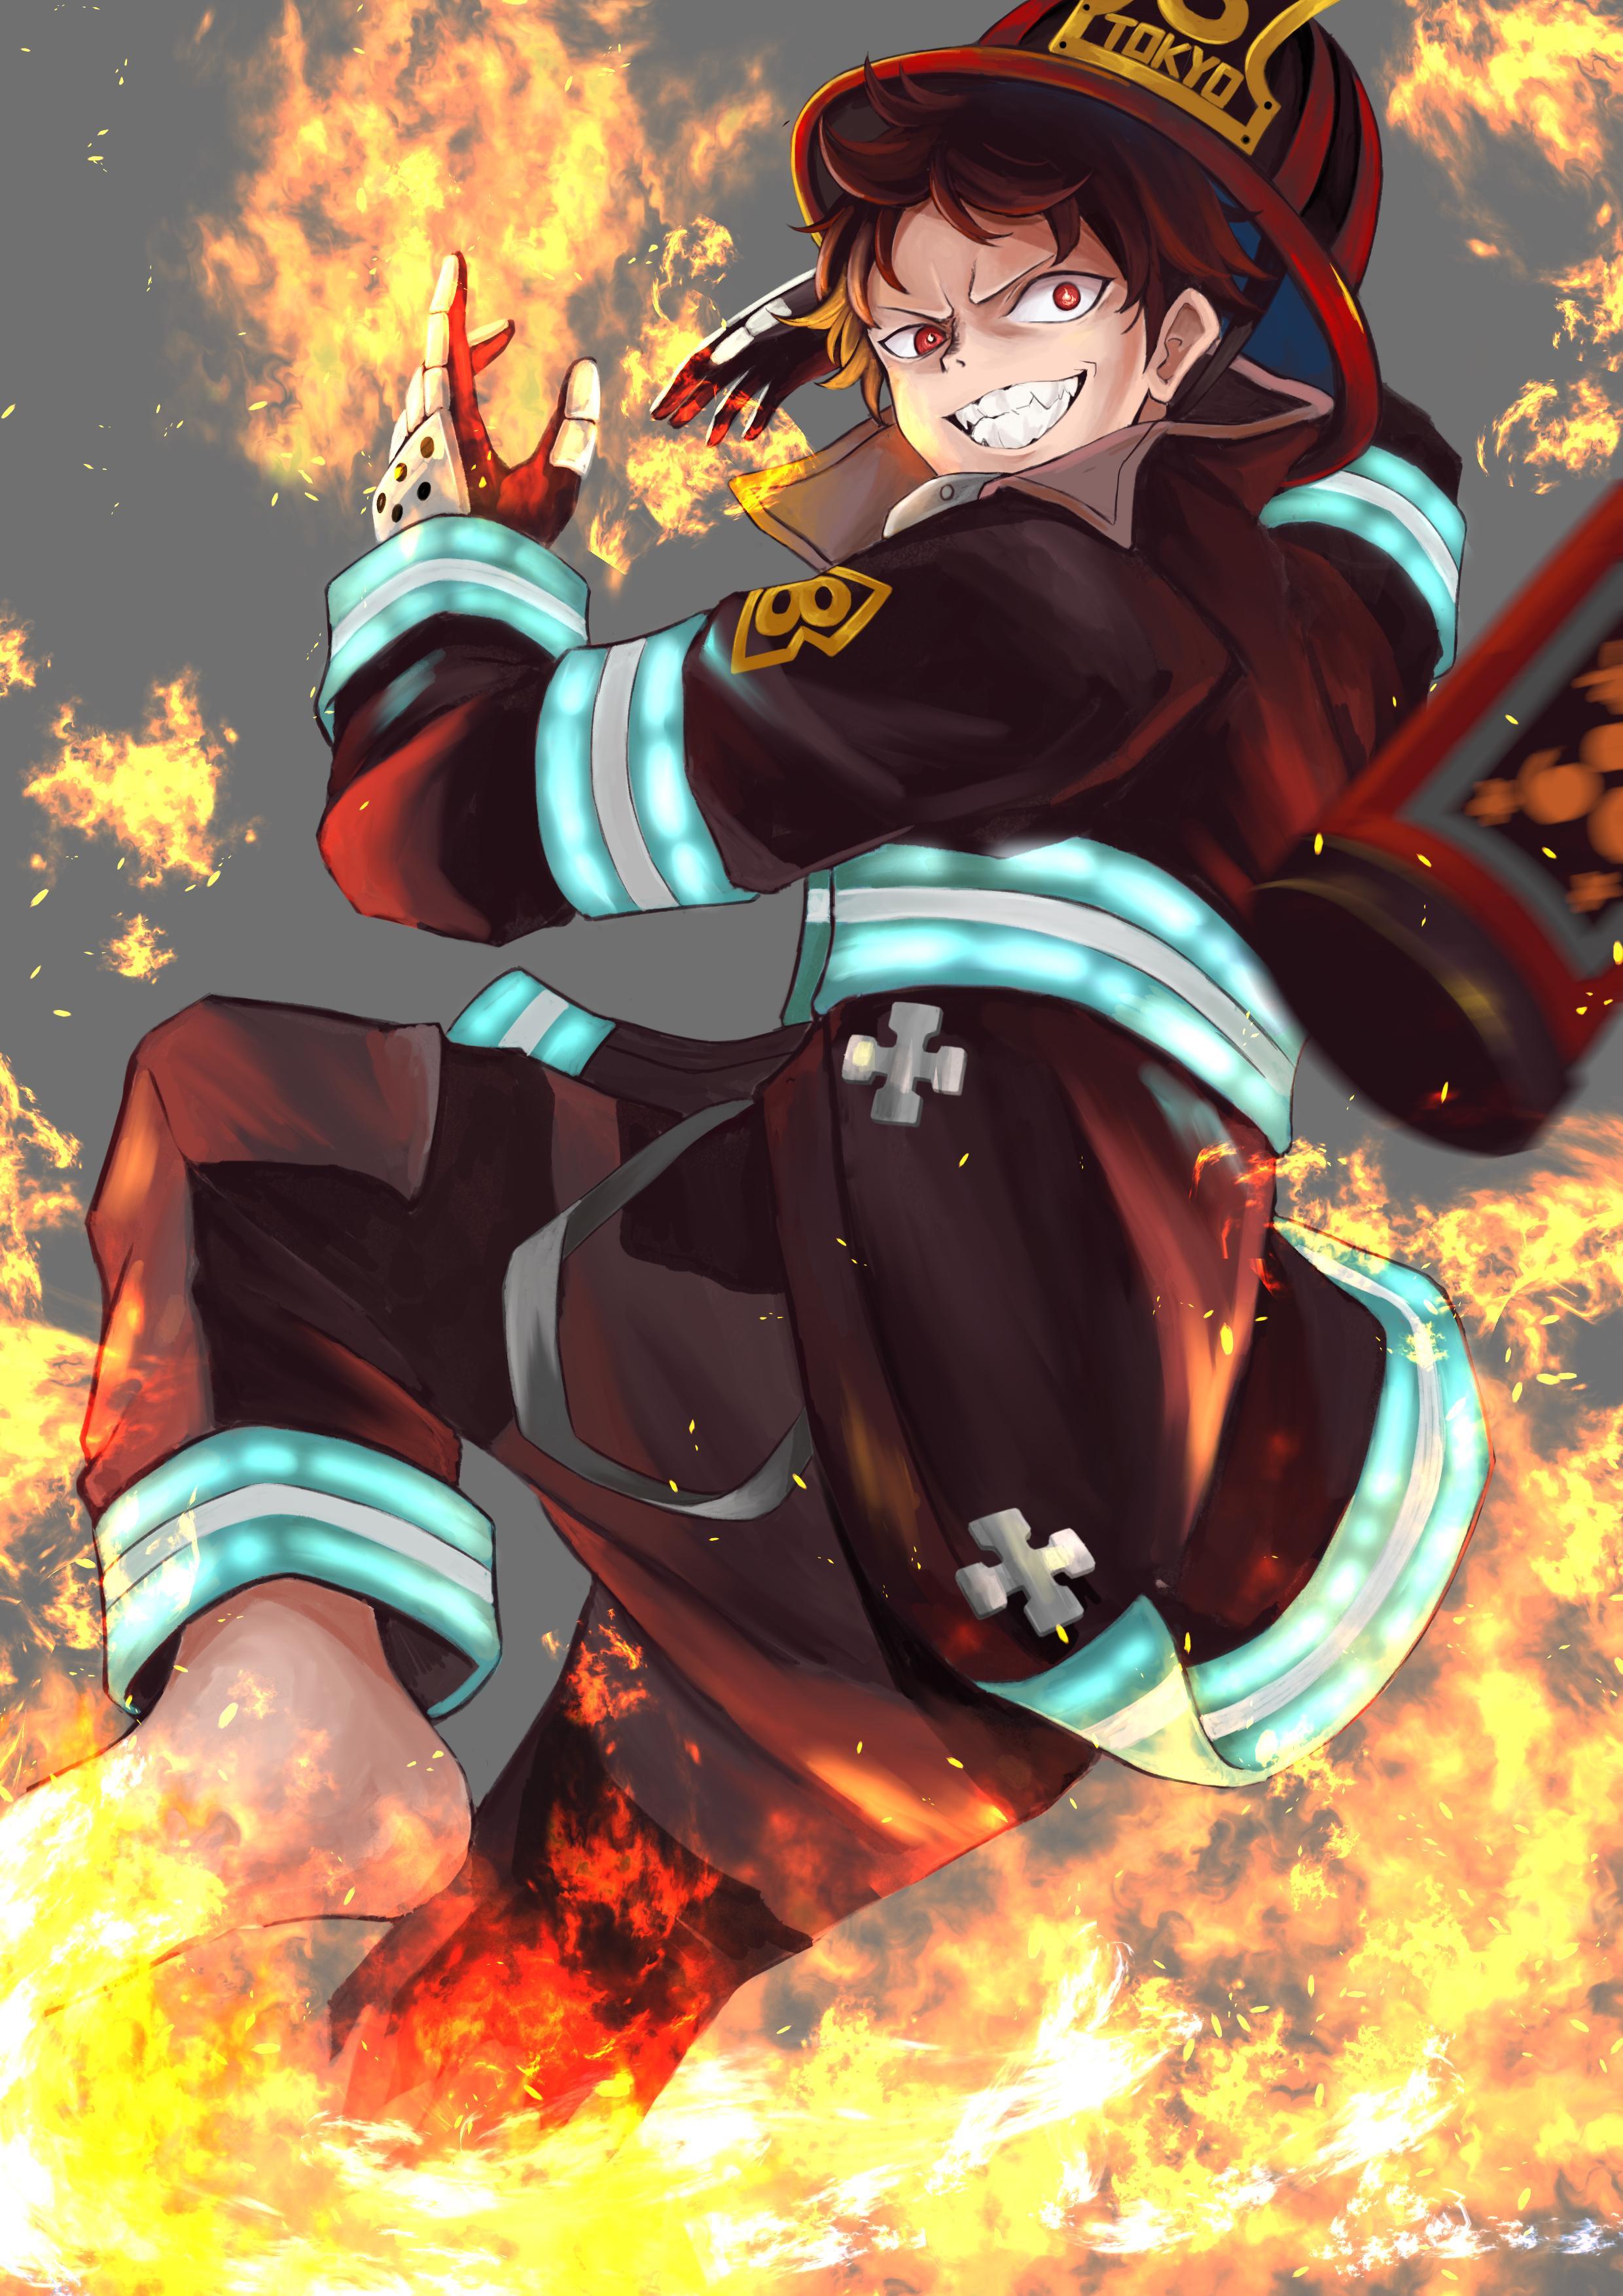 18+ Wallpaper Anime Fire Force